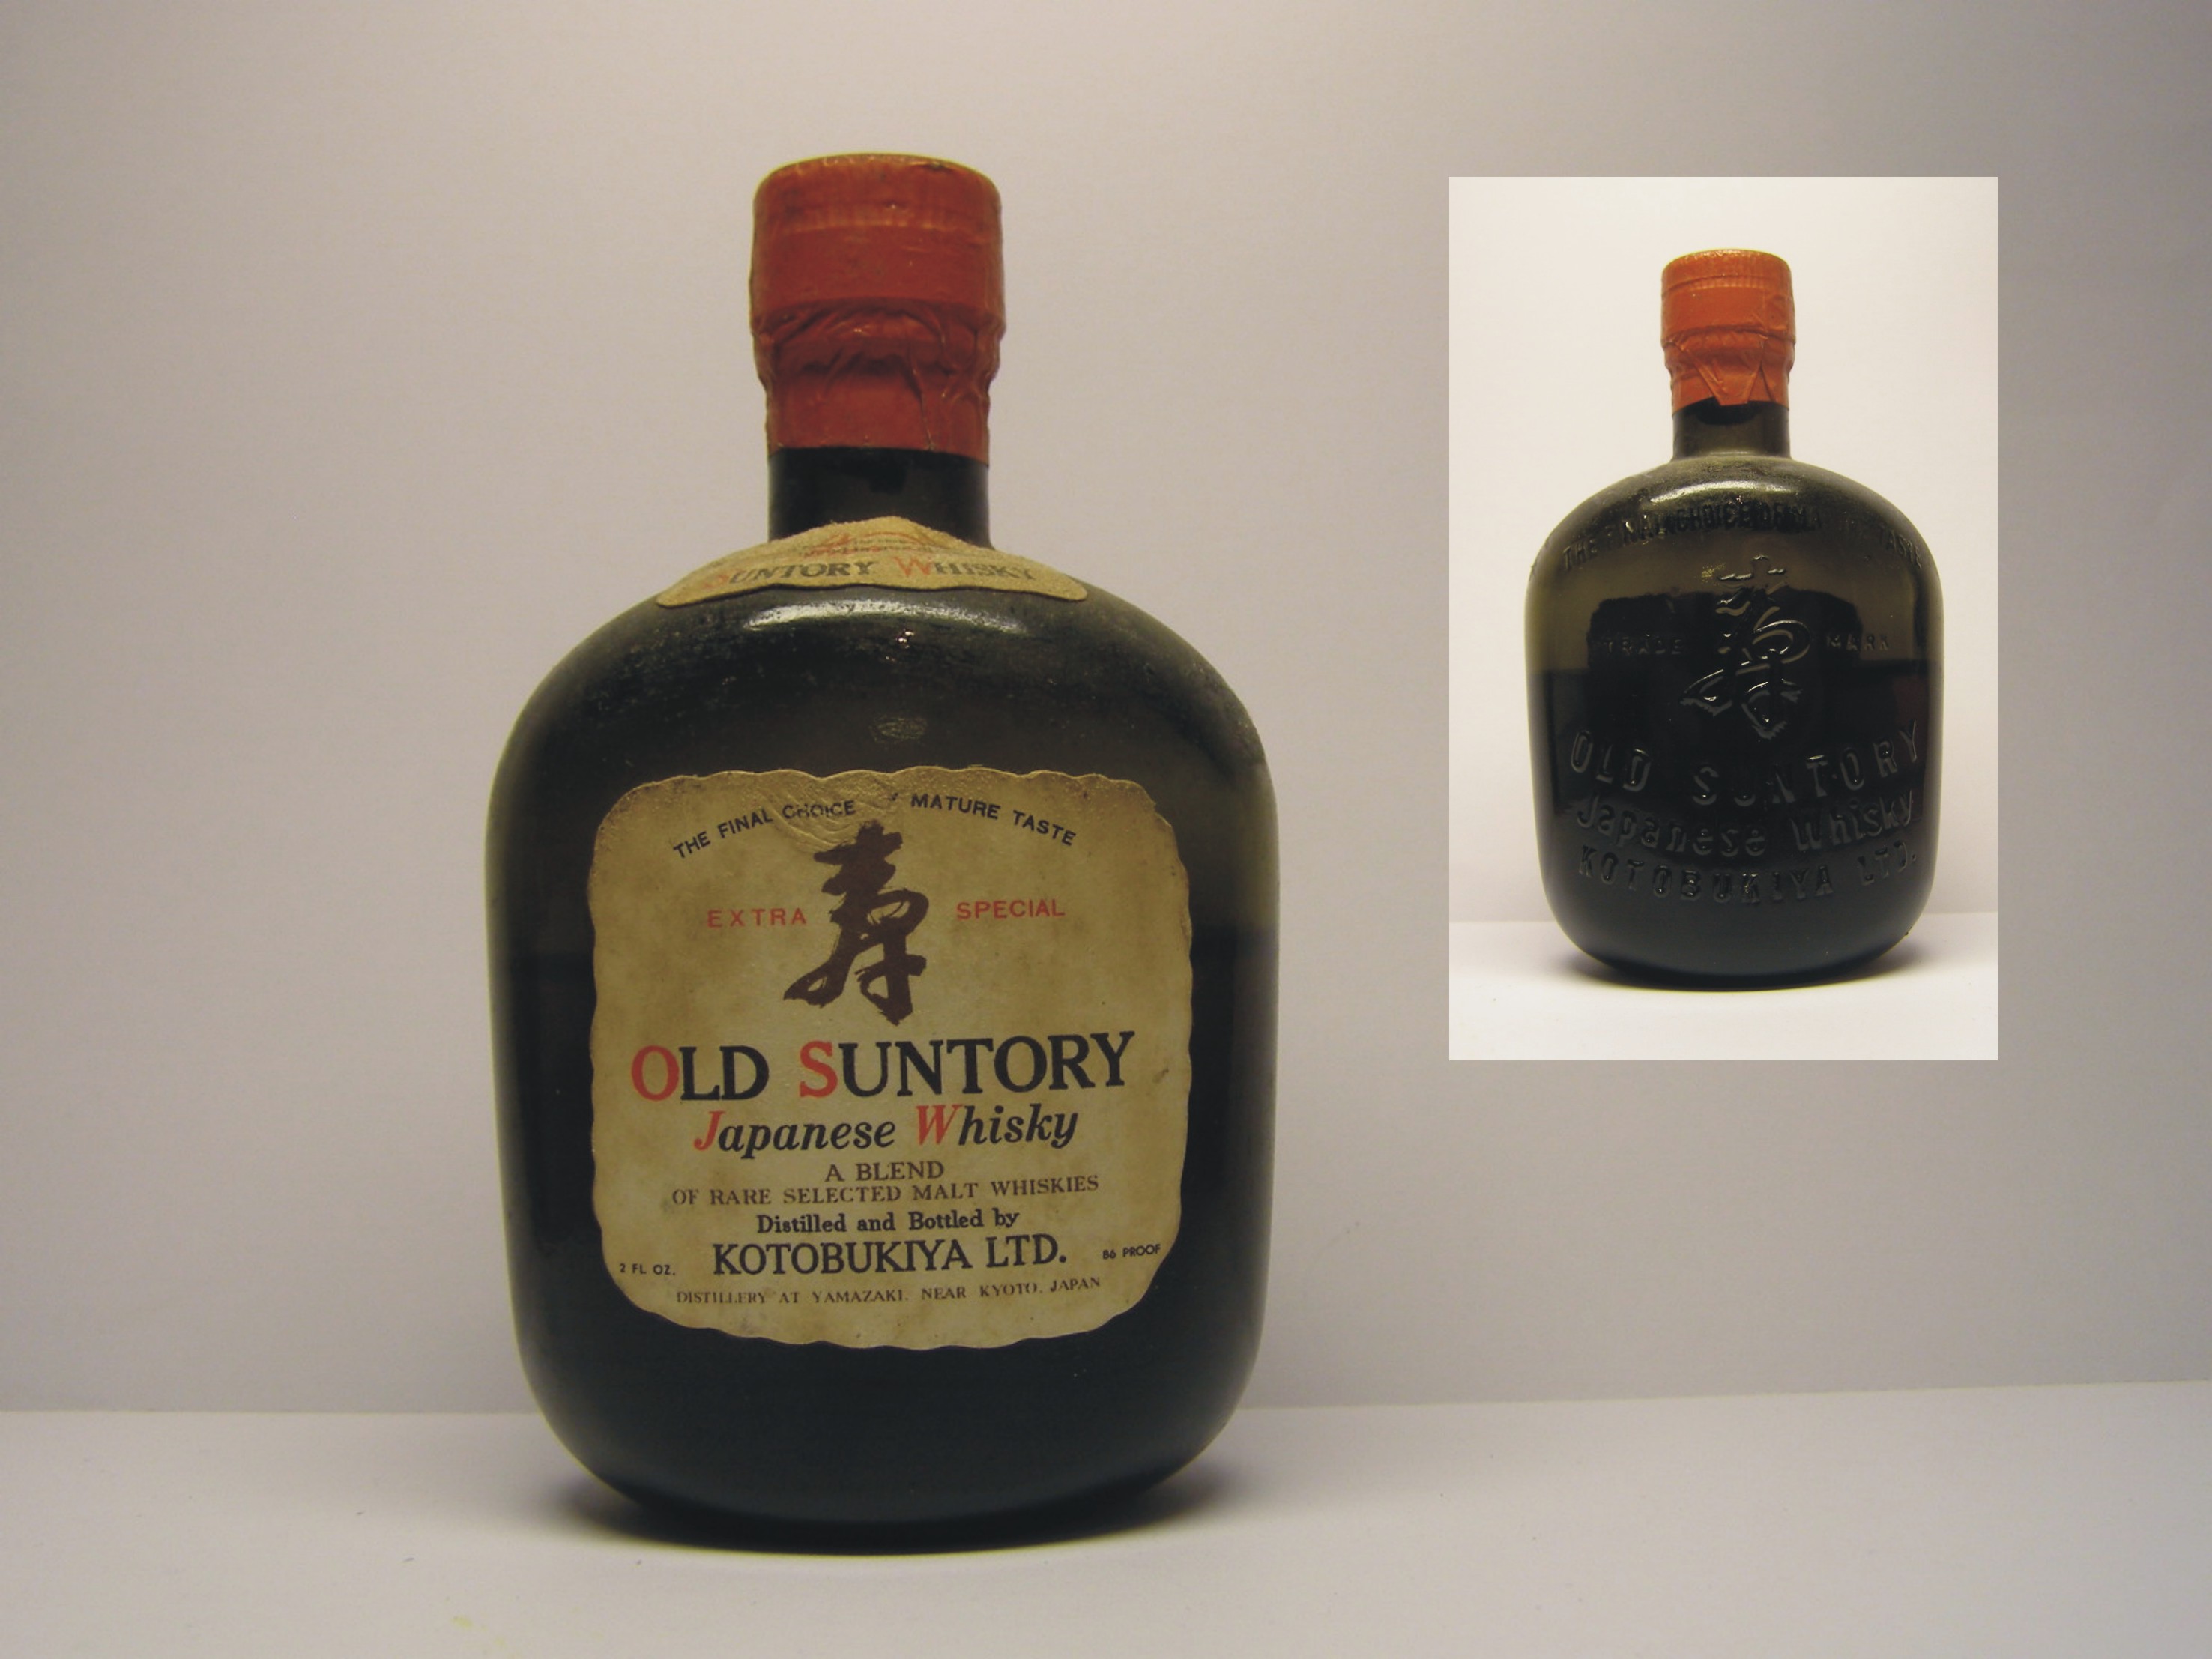 OLD SUNTORY Japanese Whisky